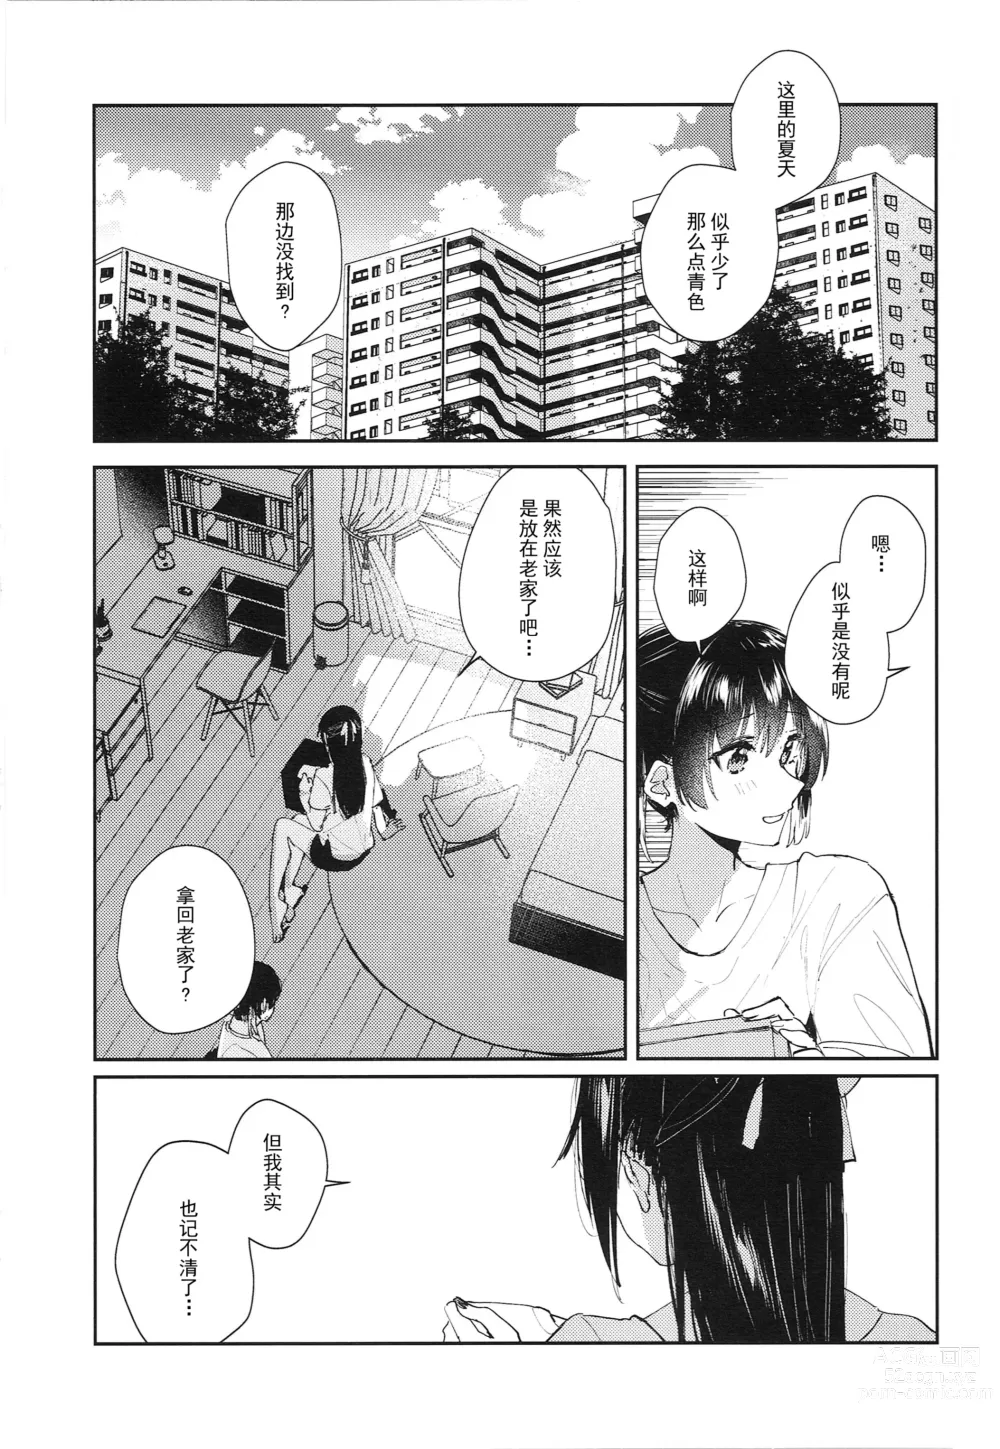 Page 5 of doujinshi Aoku Iroasero